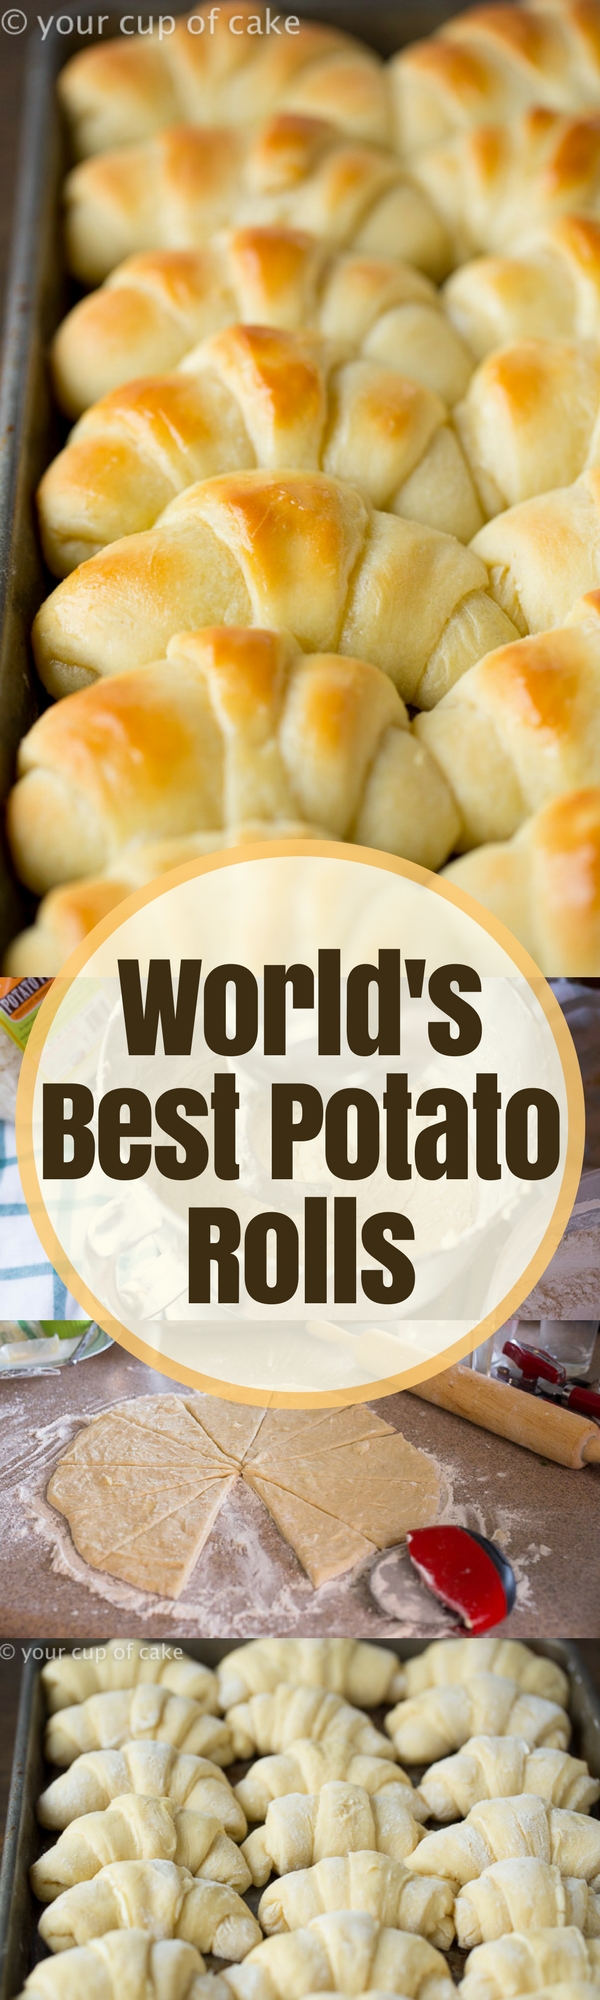 https://www.yourcupofcake.com/wp-content/uploads/2017/11/Worlds-Best-Potato-Rolls-1.jpg